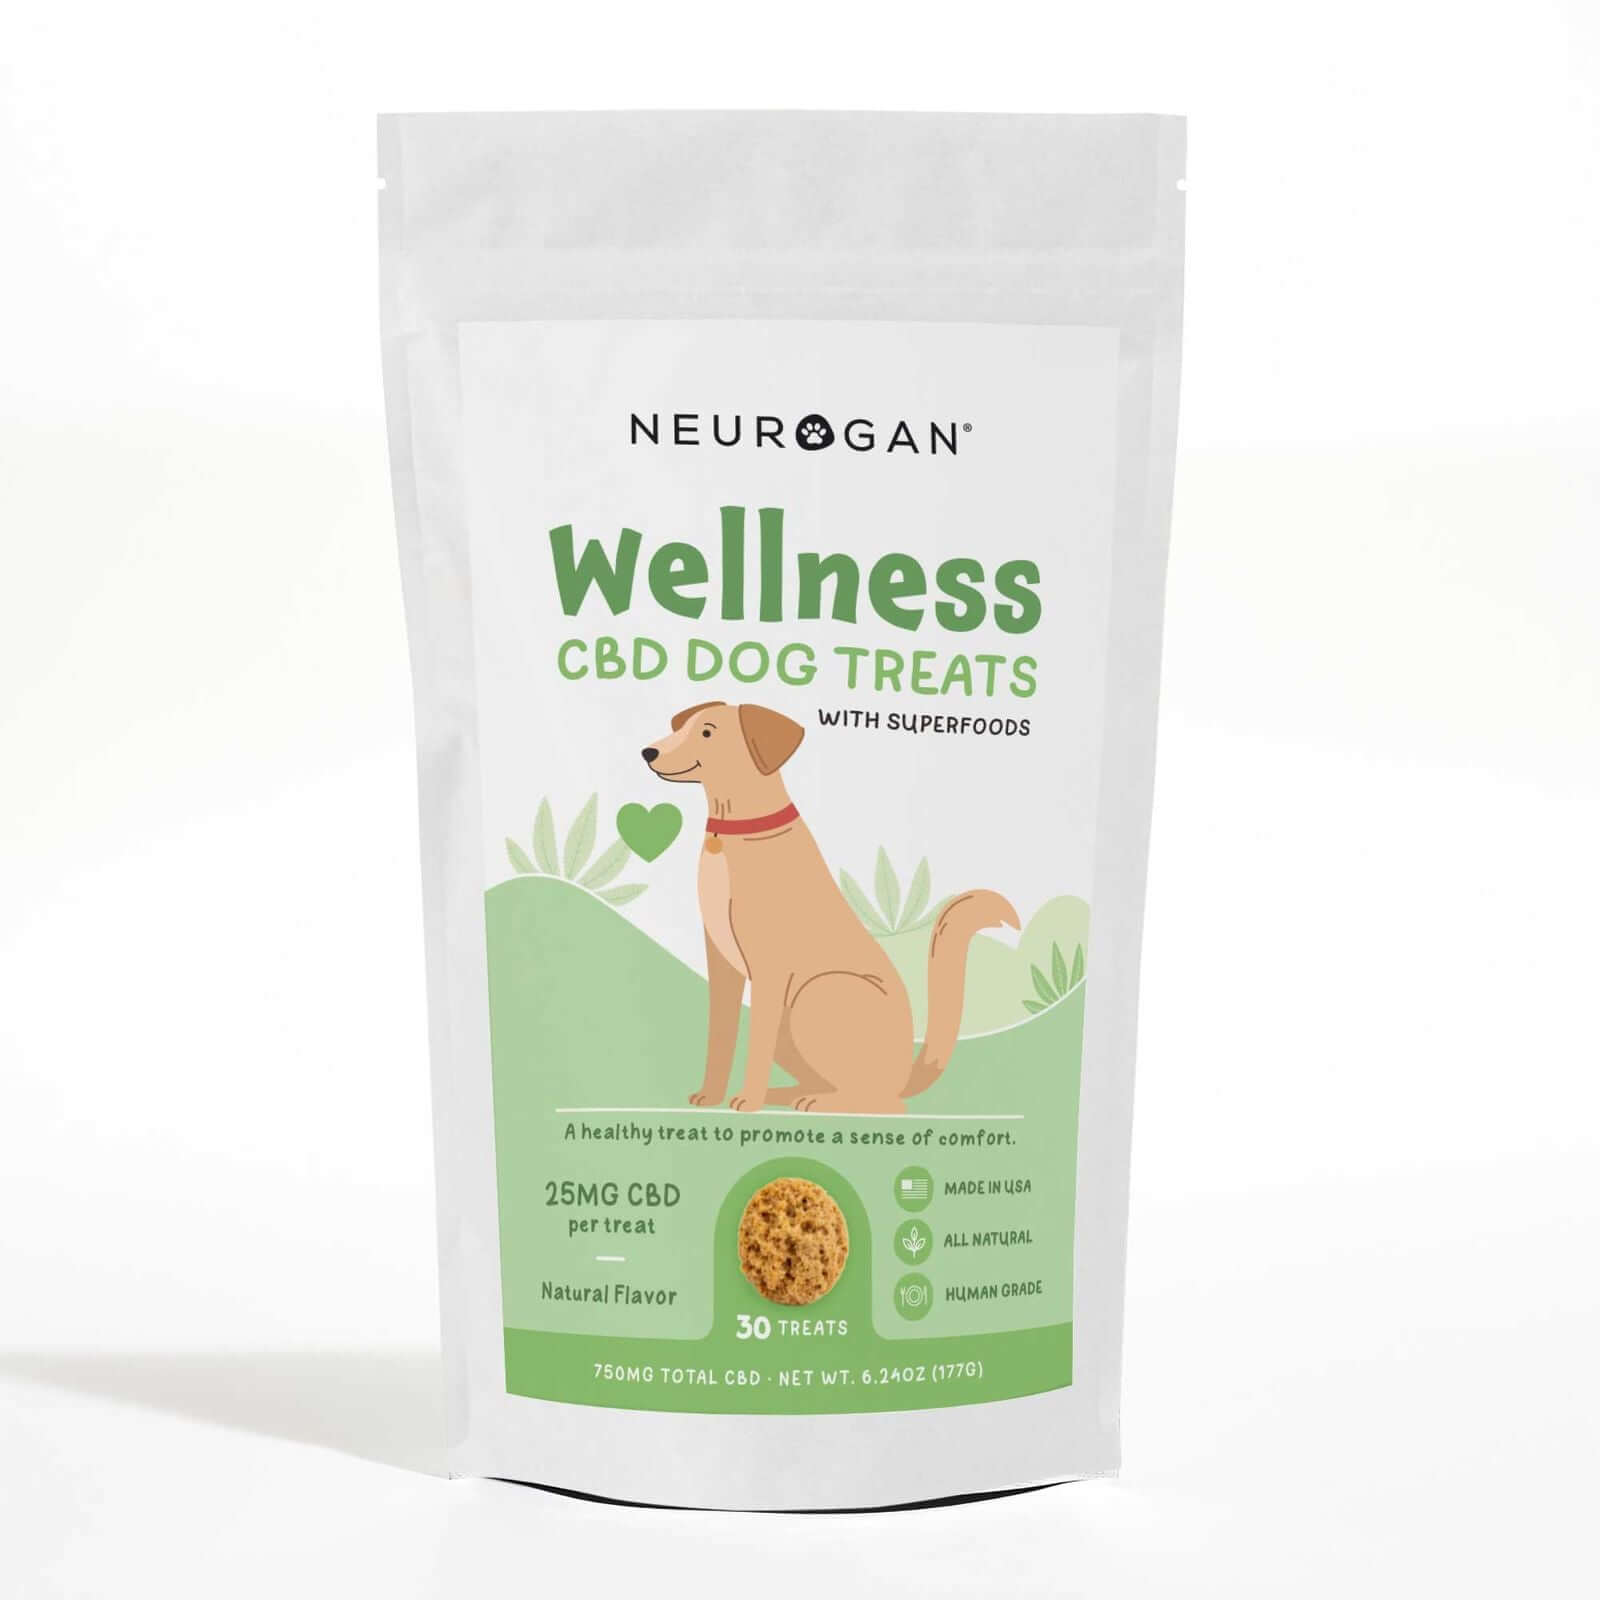 Neurogan Wellness CBD Dog Treats, 750mg total CBD, 30-piece container.